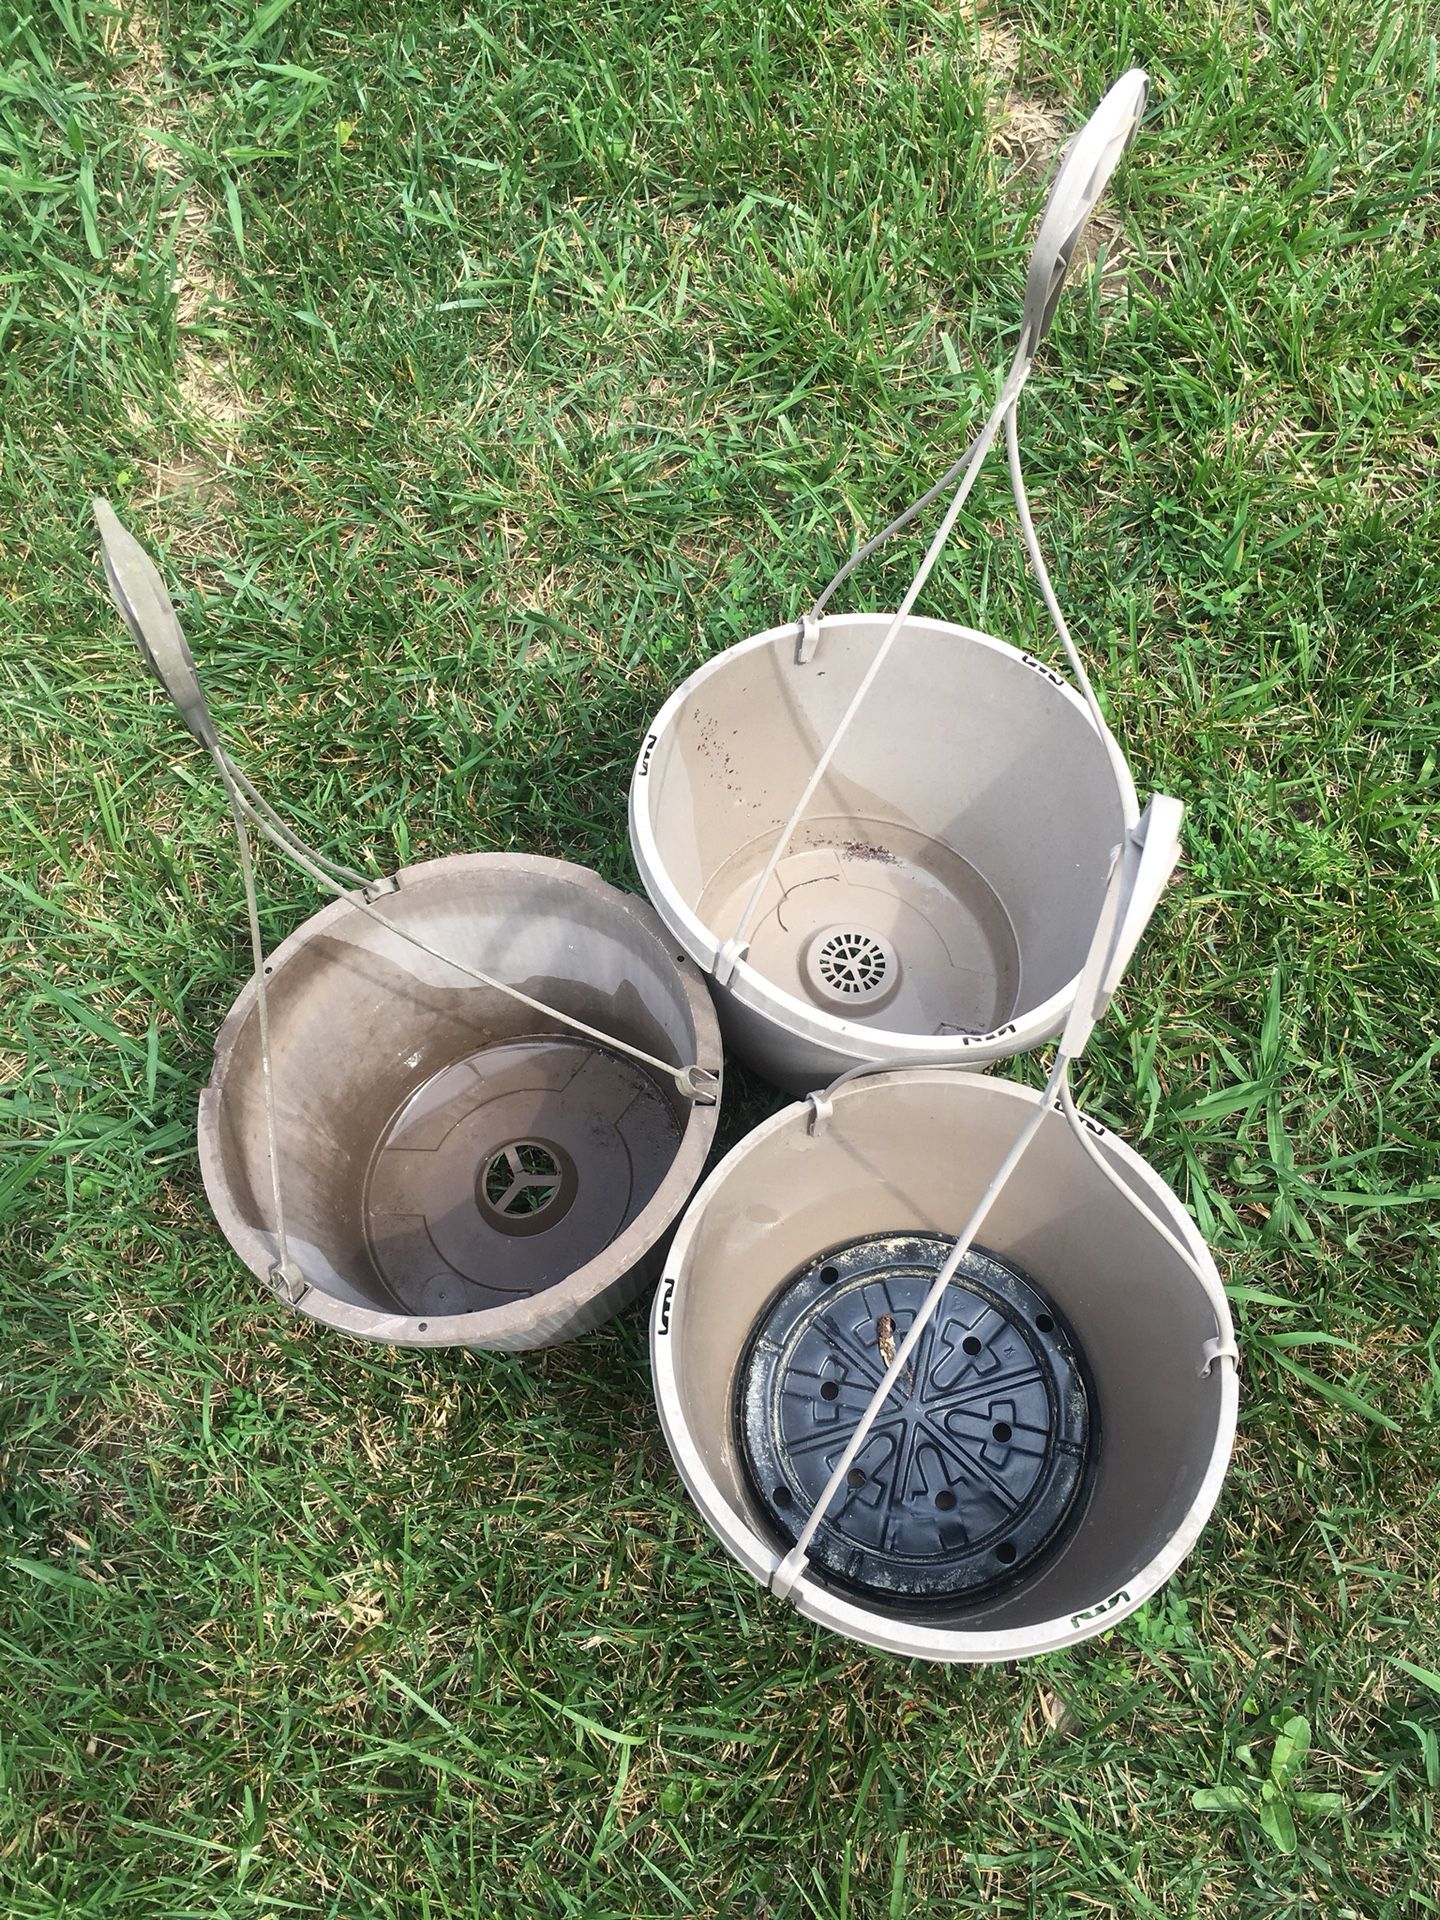 Hanging plant pots